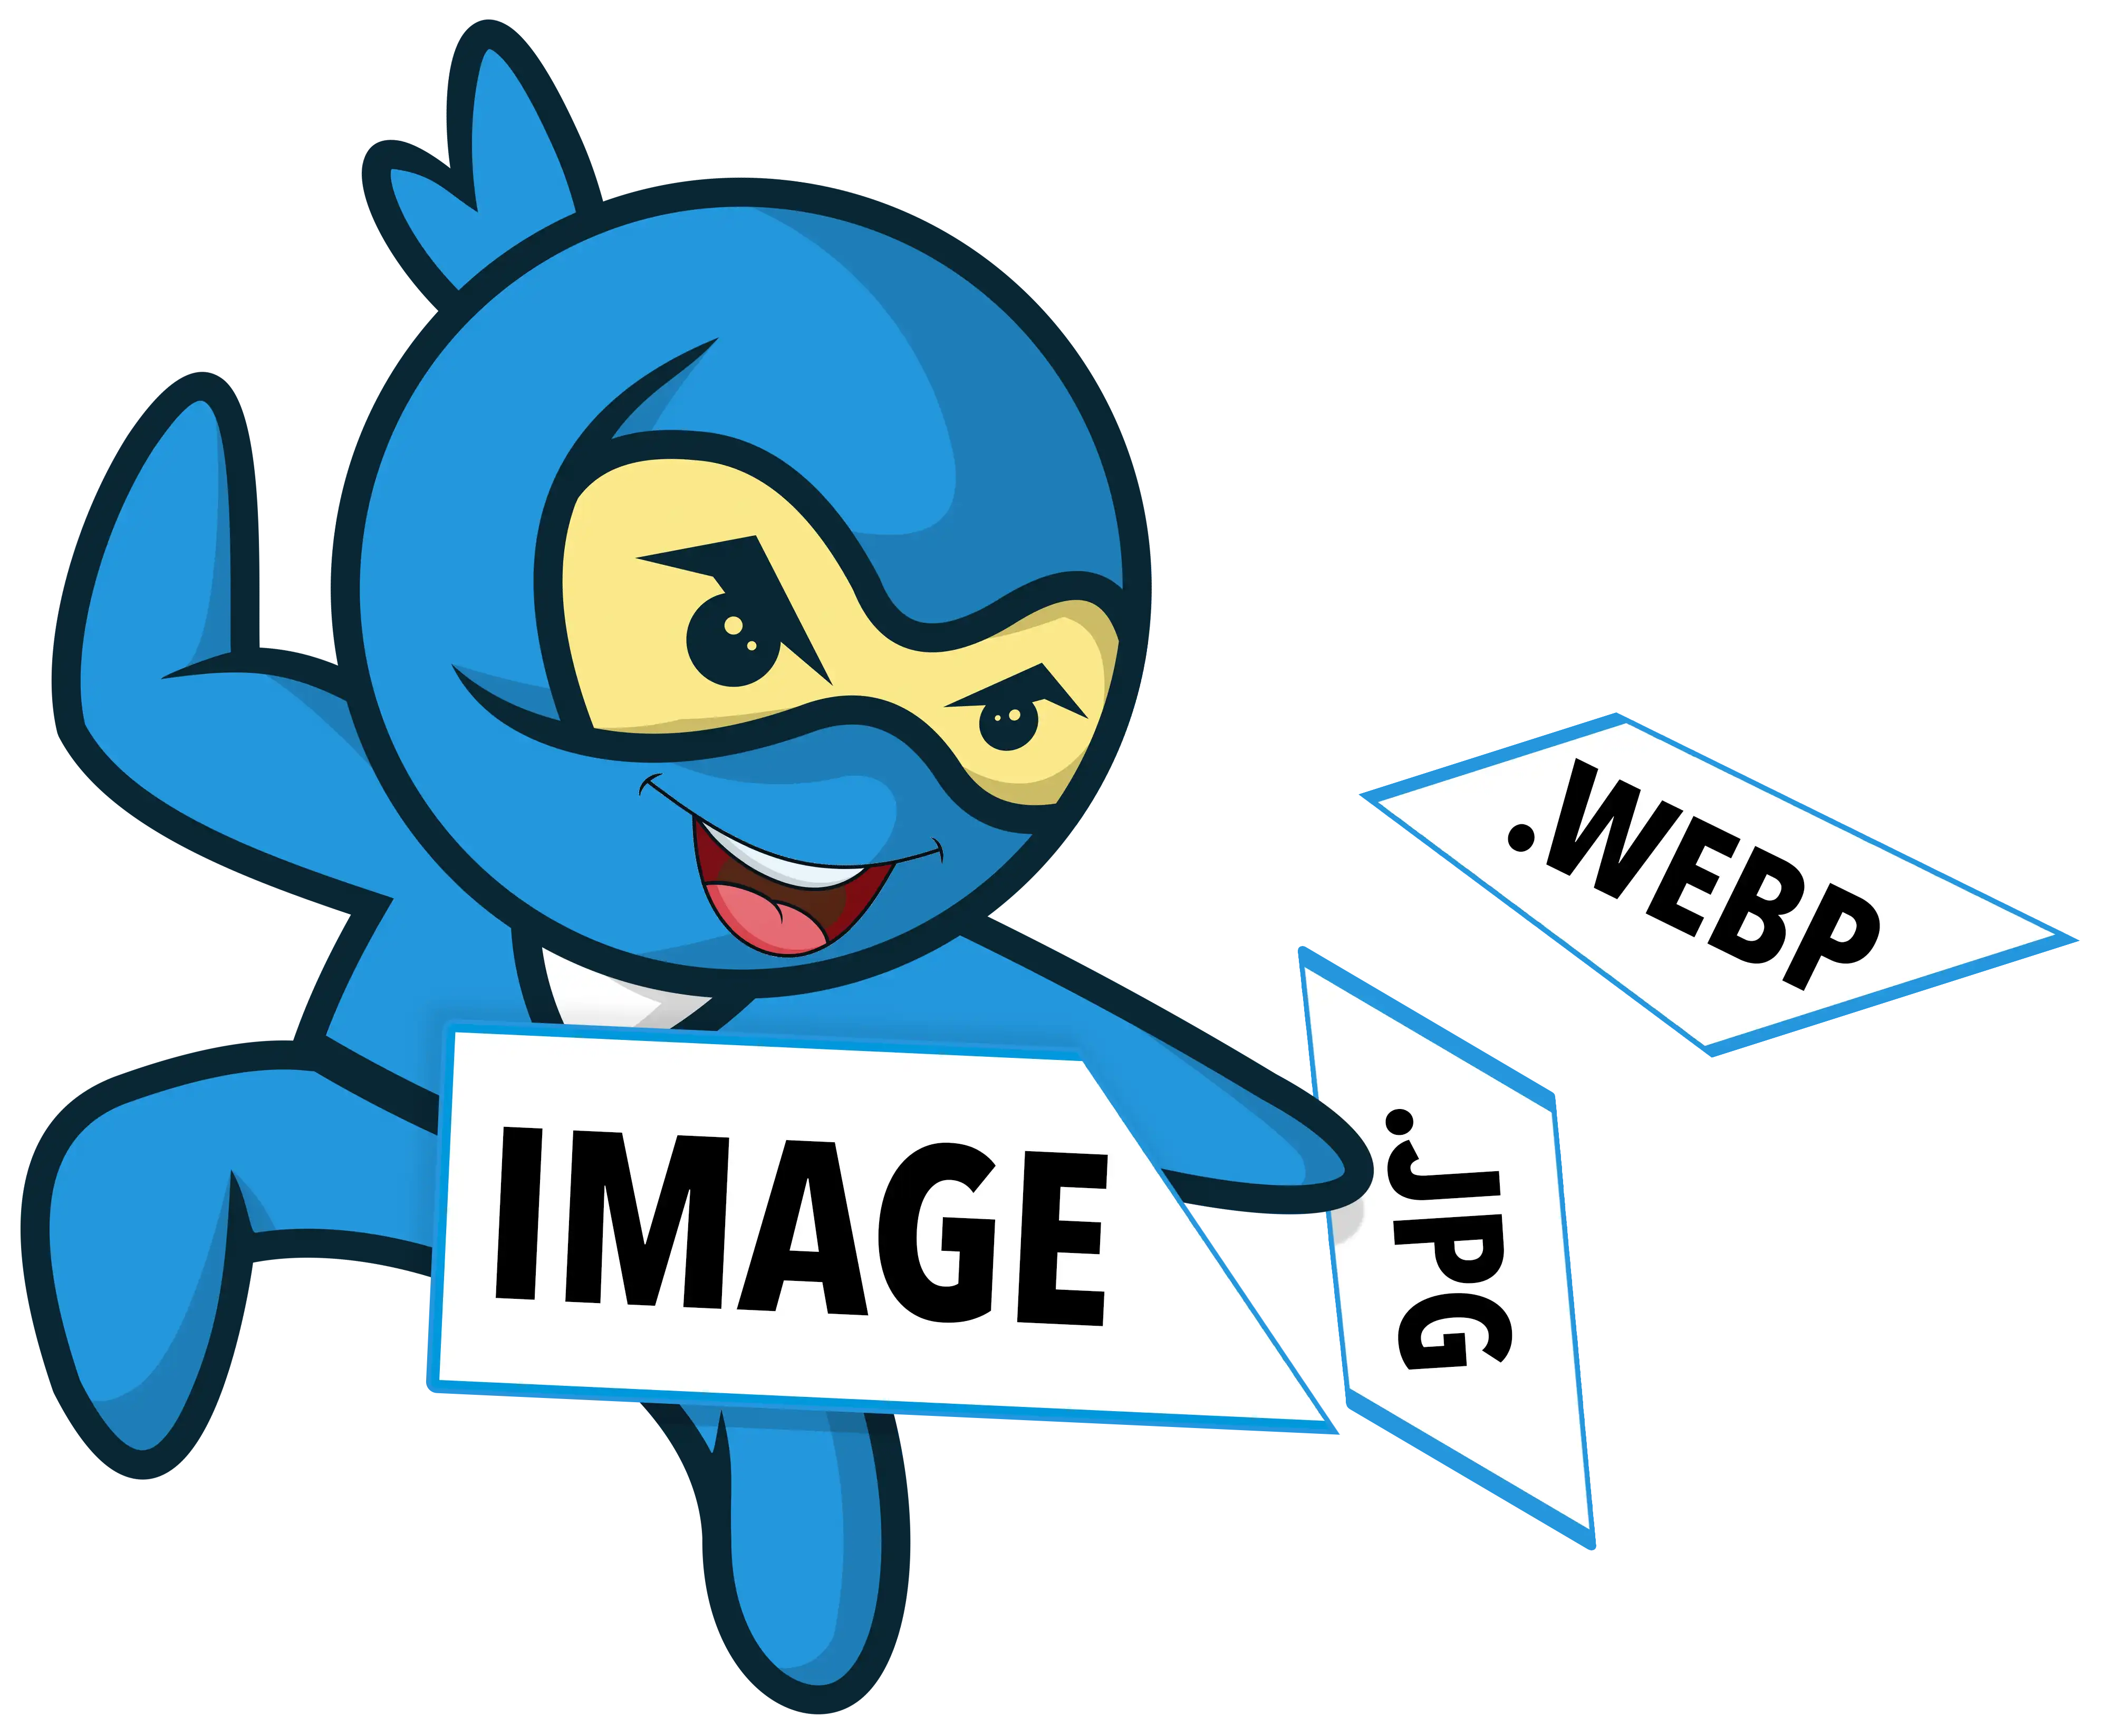 Online Image Viewer | Blue Ninja logo by Image Convert Ninja